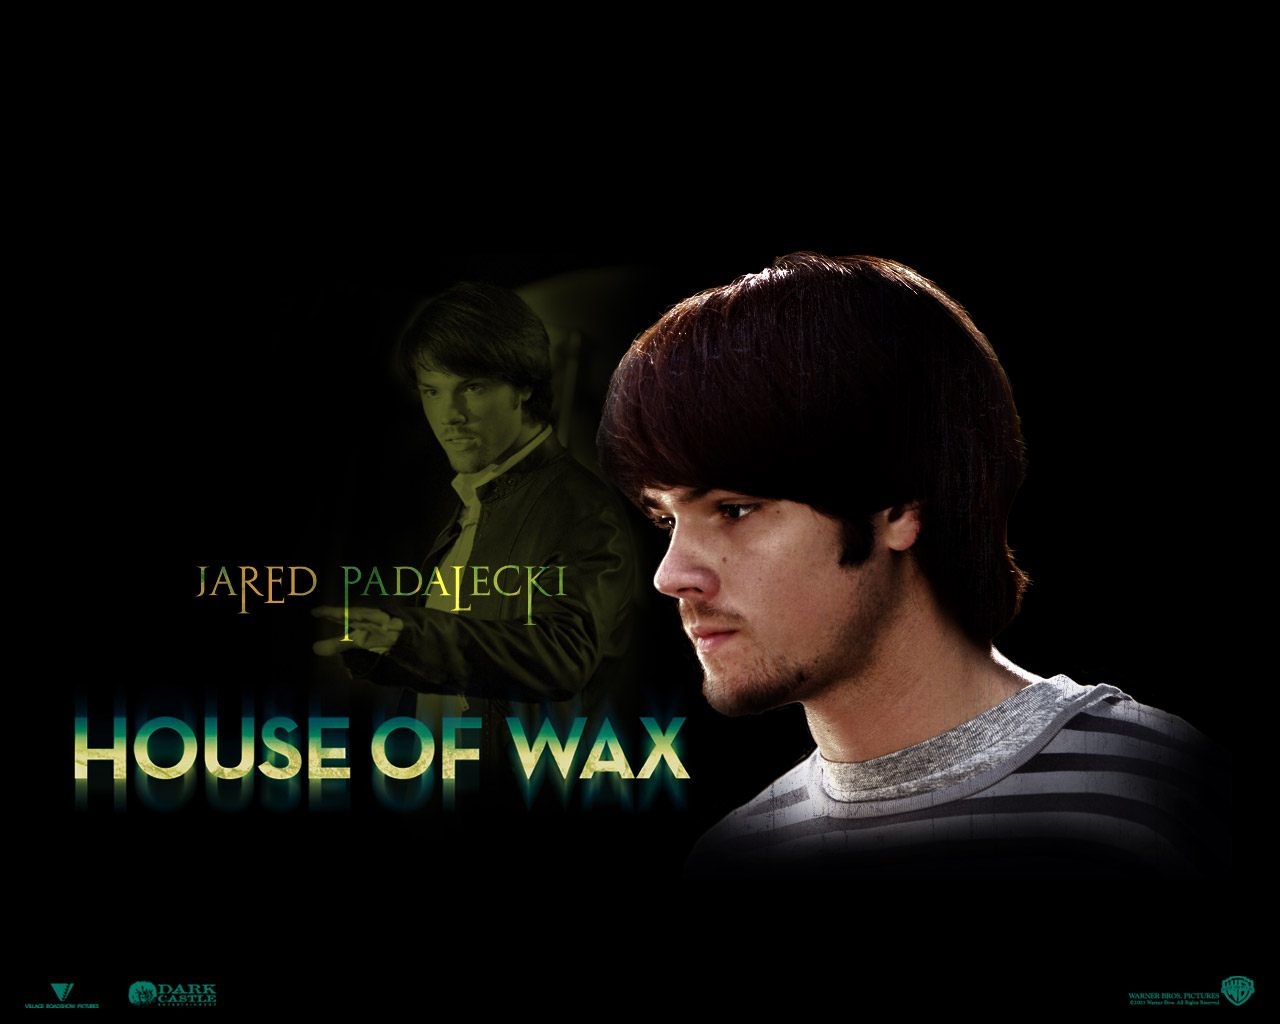 House of wax 4